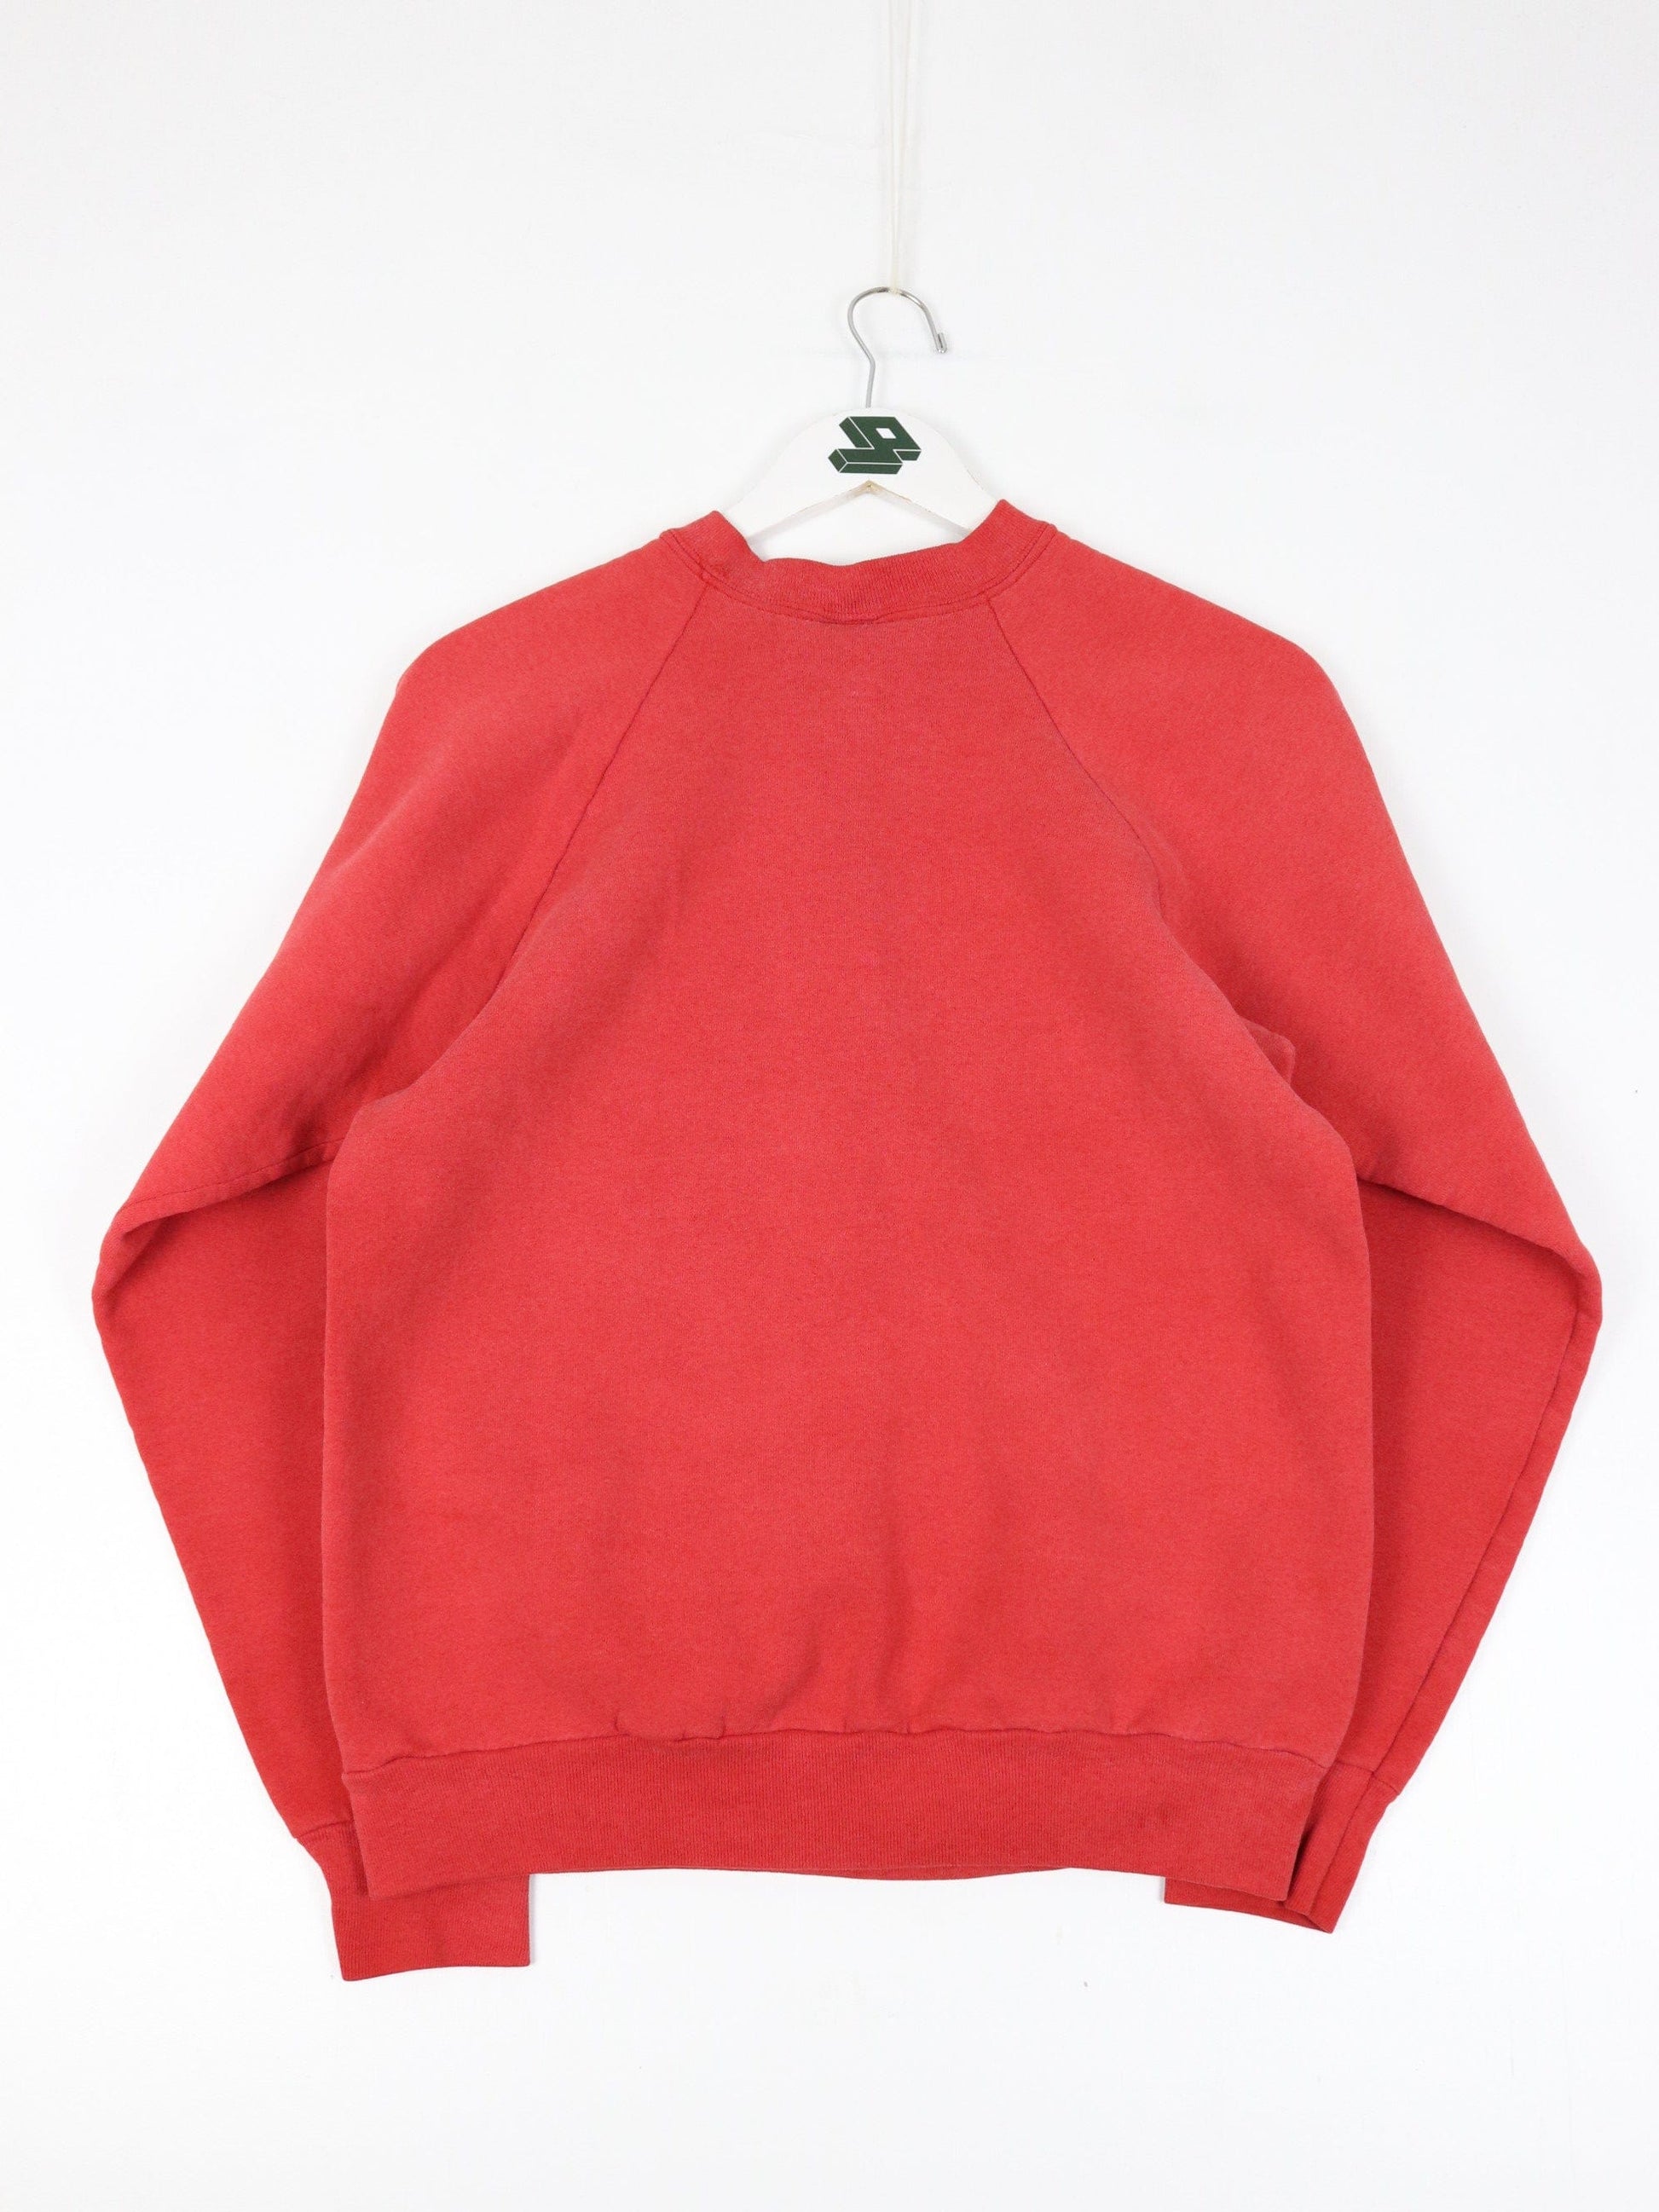 Other Sweatshirts & Hoodies Vintage Fruit of the Loom Sweatshirt Fits Mens Small Red Blank Sweater